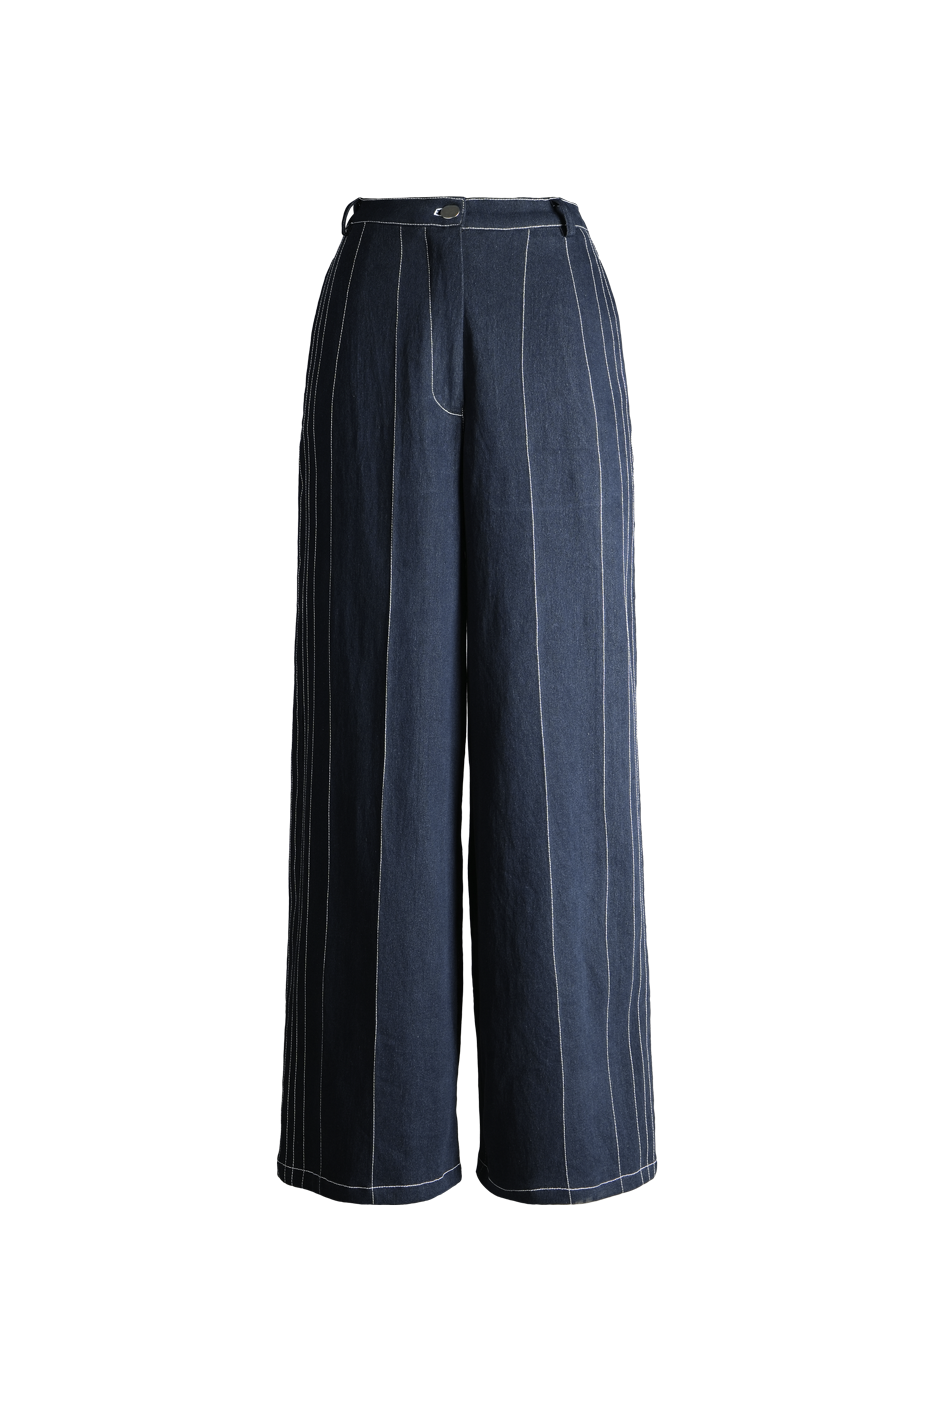 Roundtree & Yorke Classic Fit Flat Front Denim Trouser Pants | Dillard's